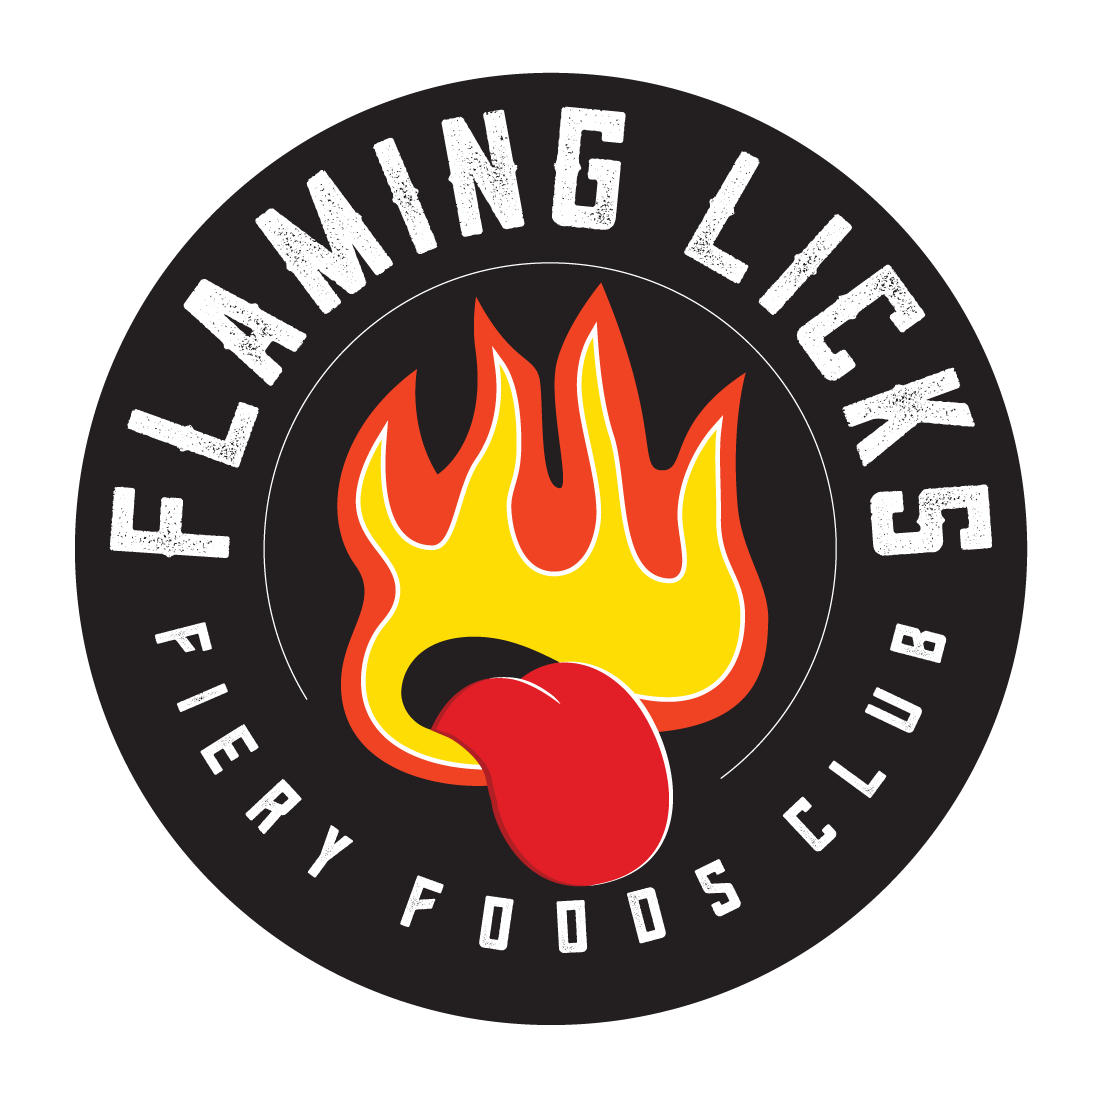 Flaming Licks Wimborne Chilli Shop logo